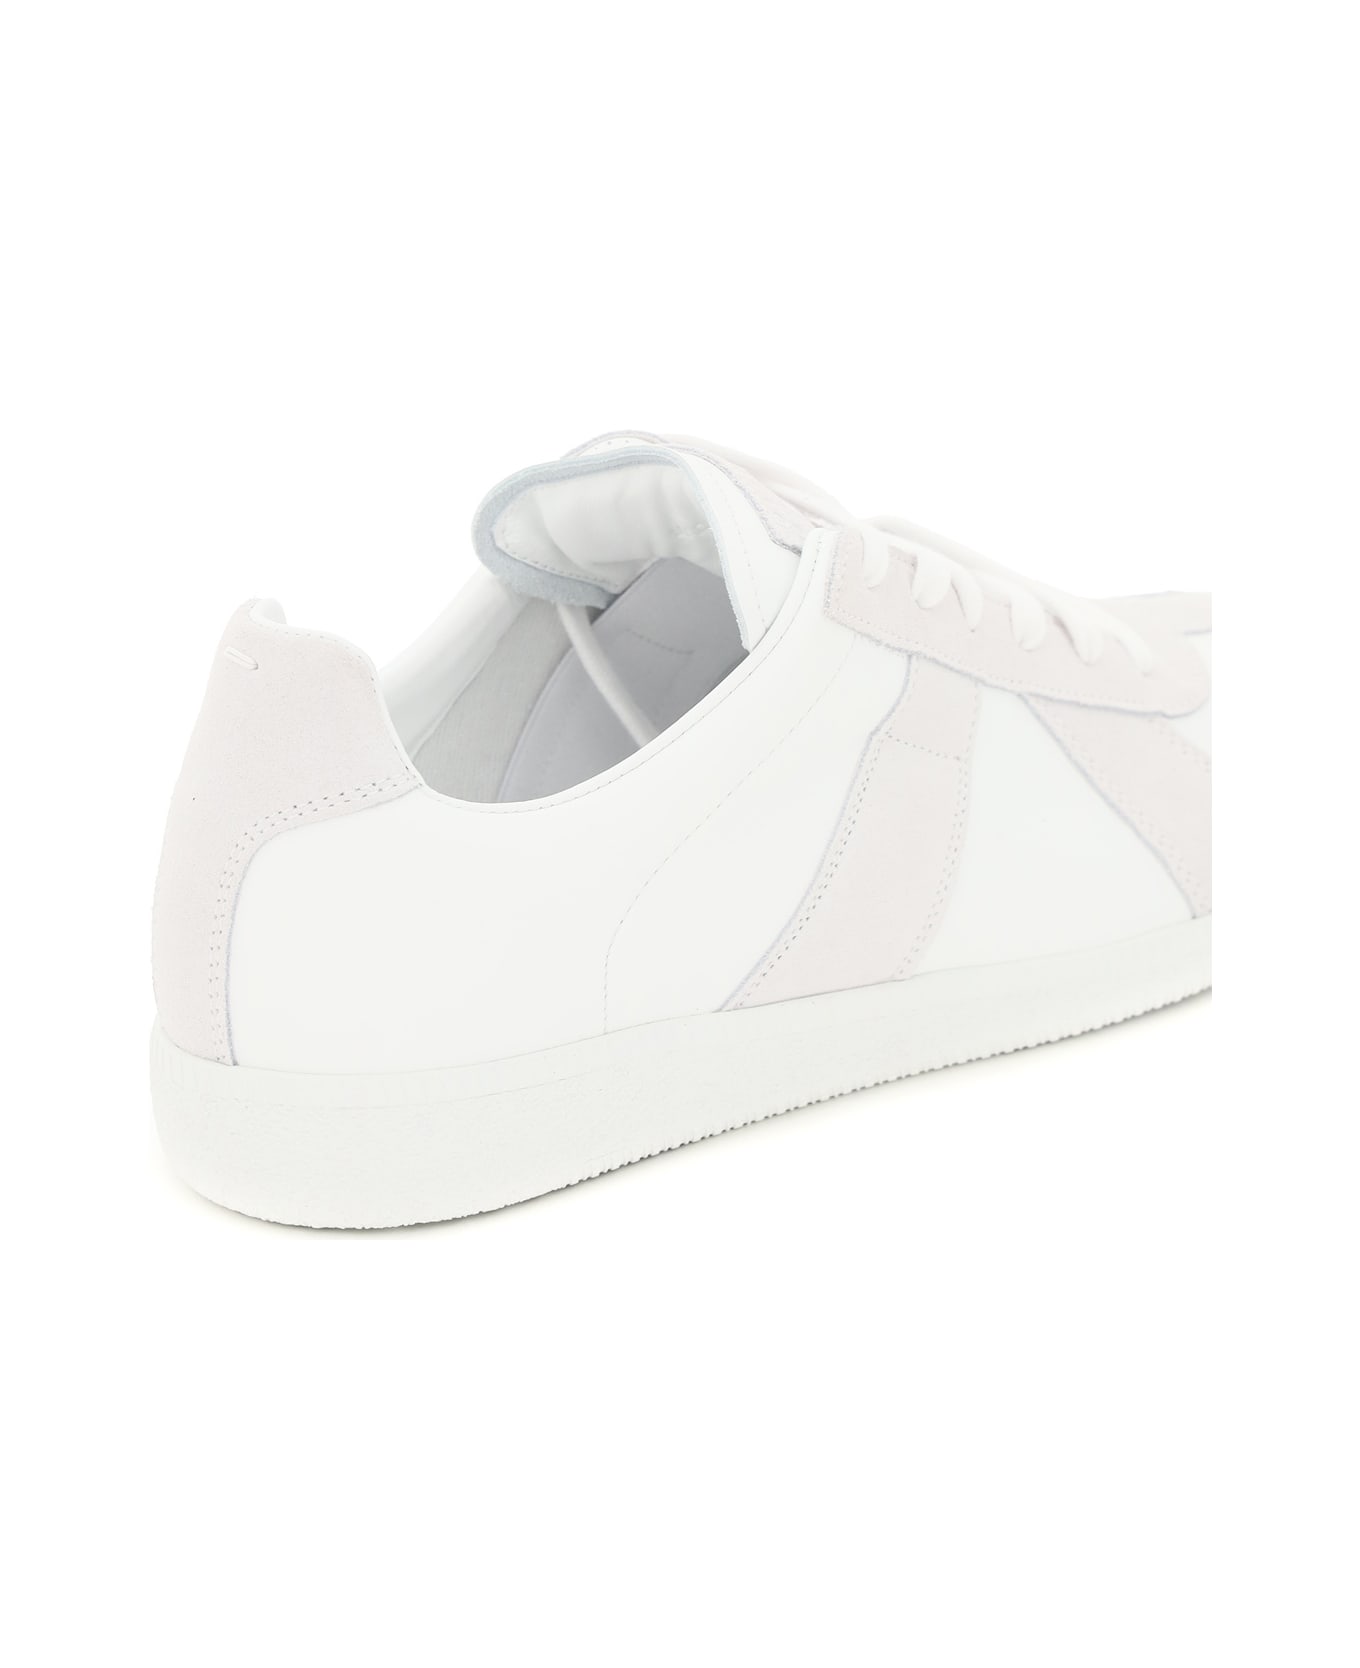 Maison Margiela Replica Leather Sneakers - White